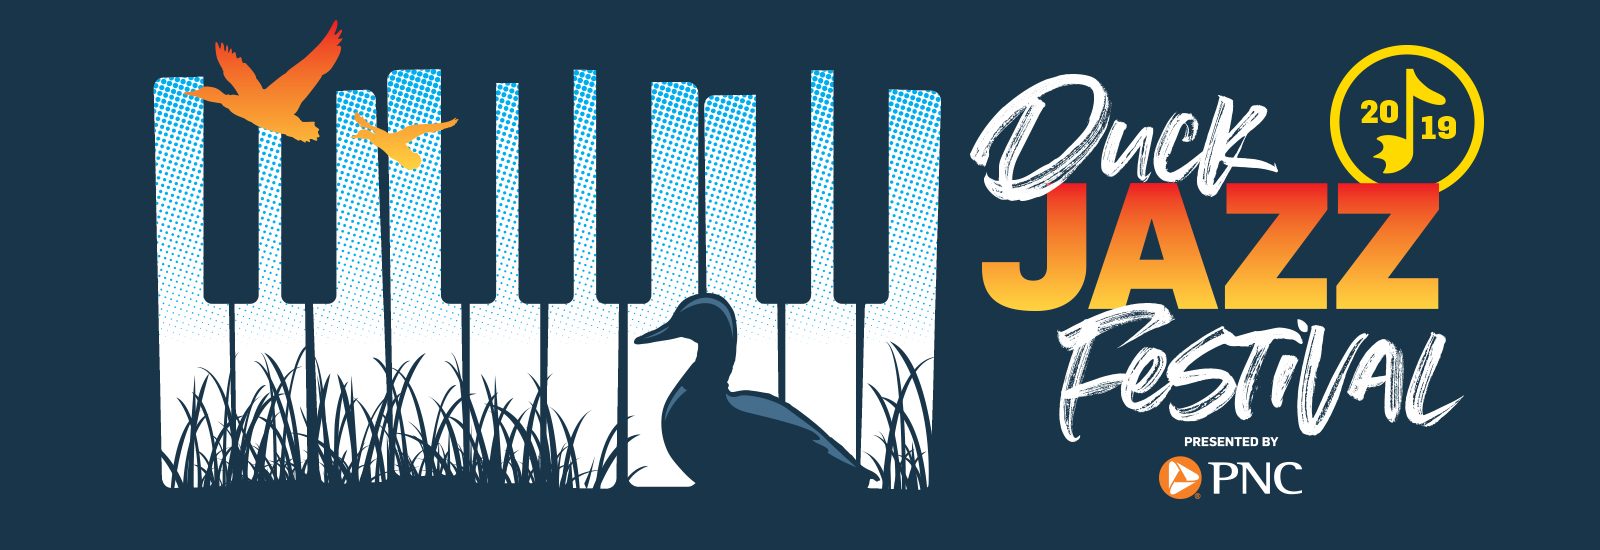 Duck Jazz Festival Coming October 12 & 13